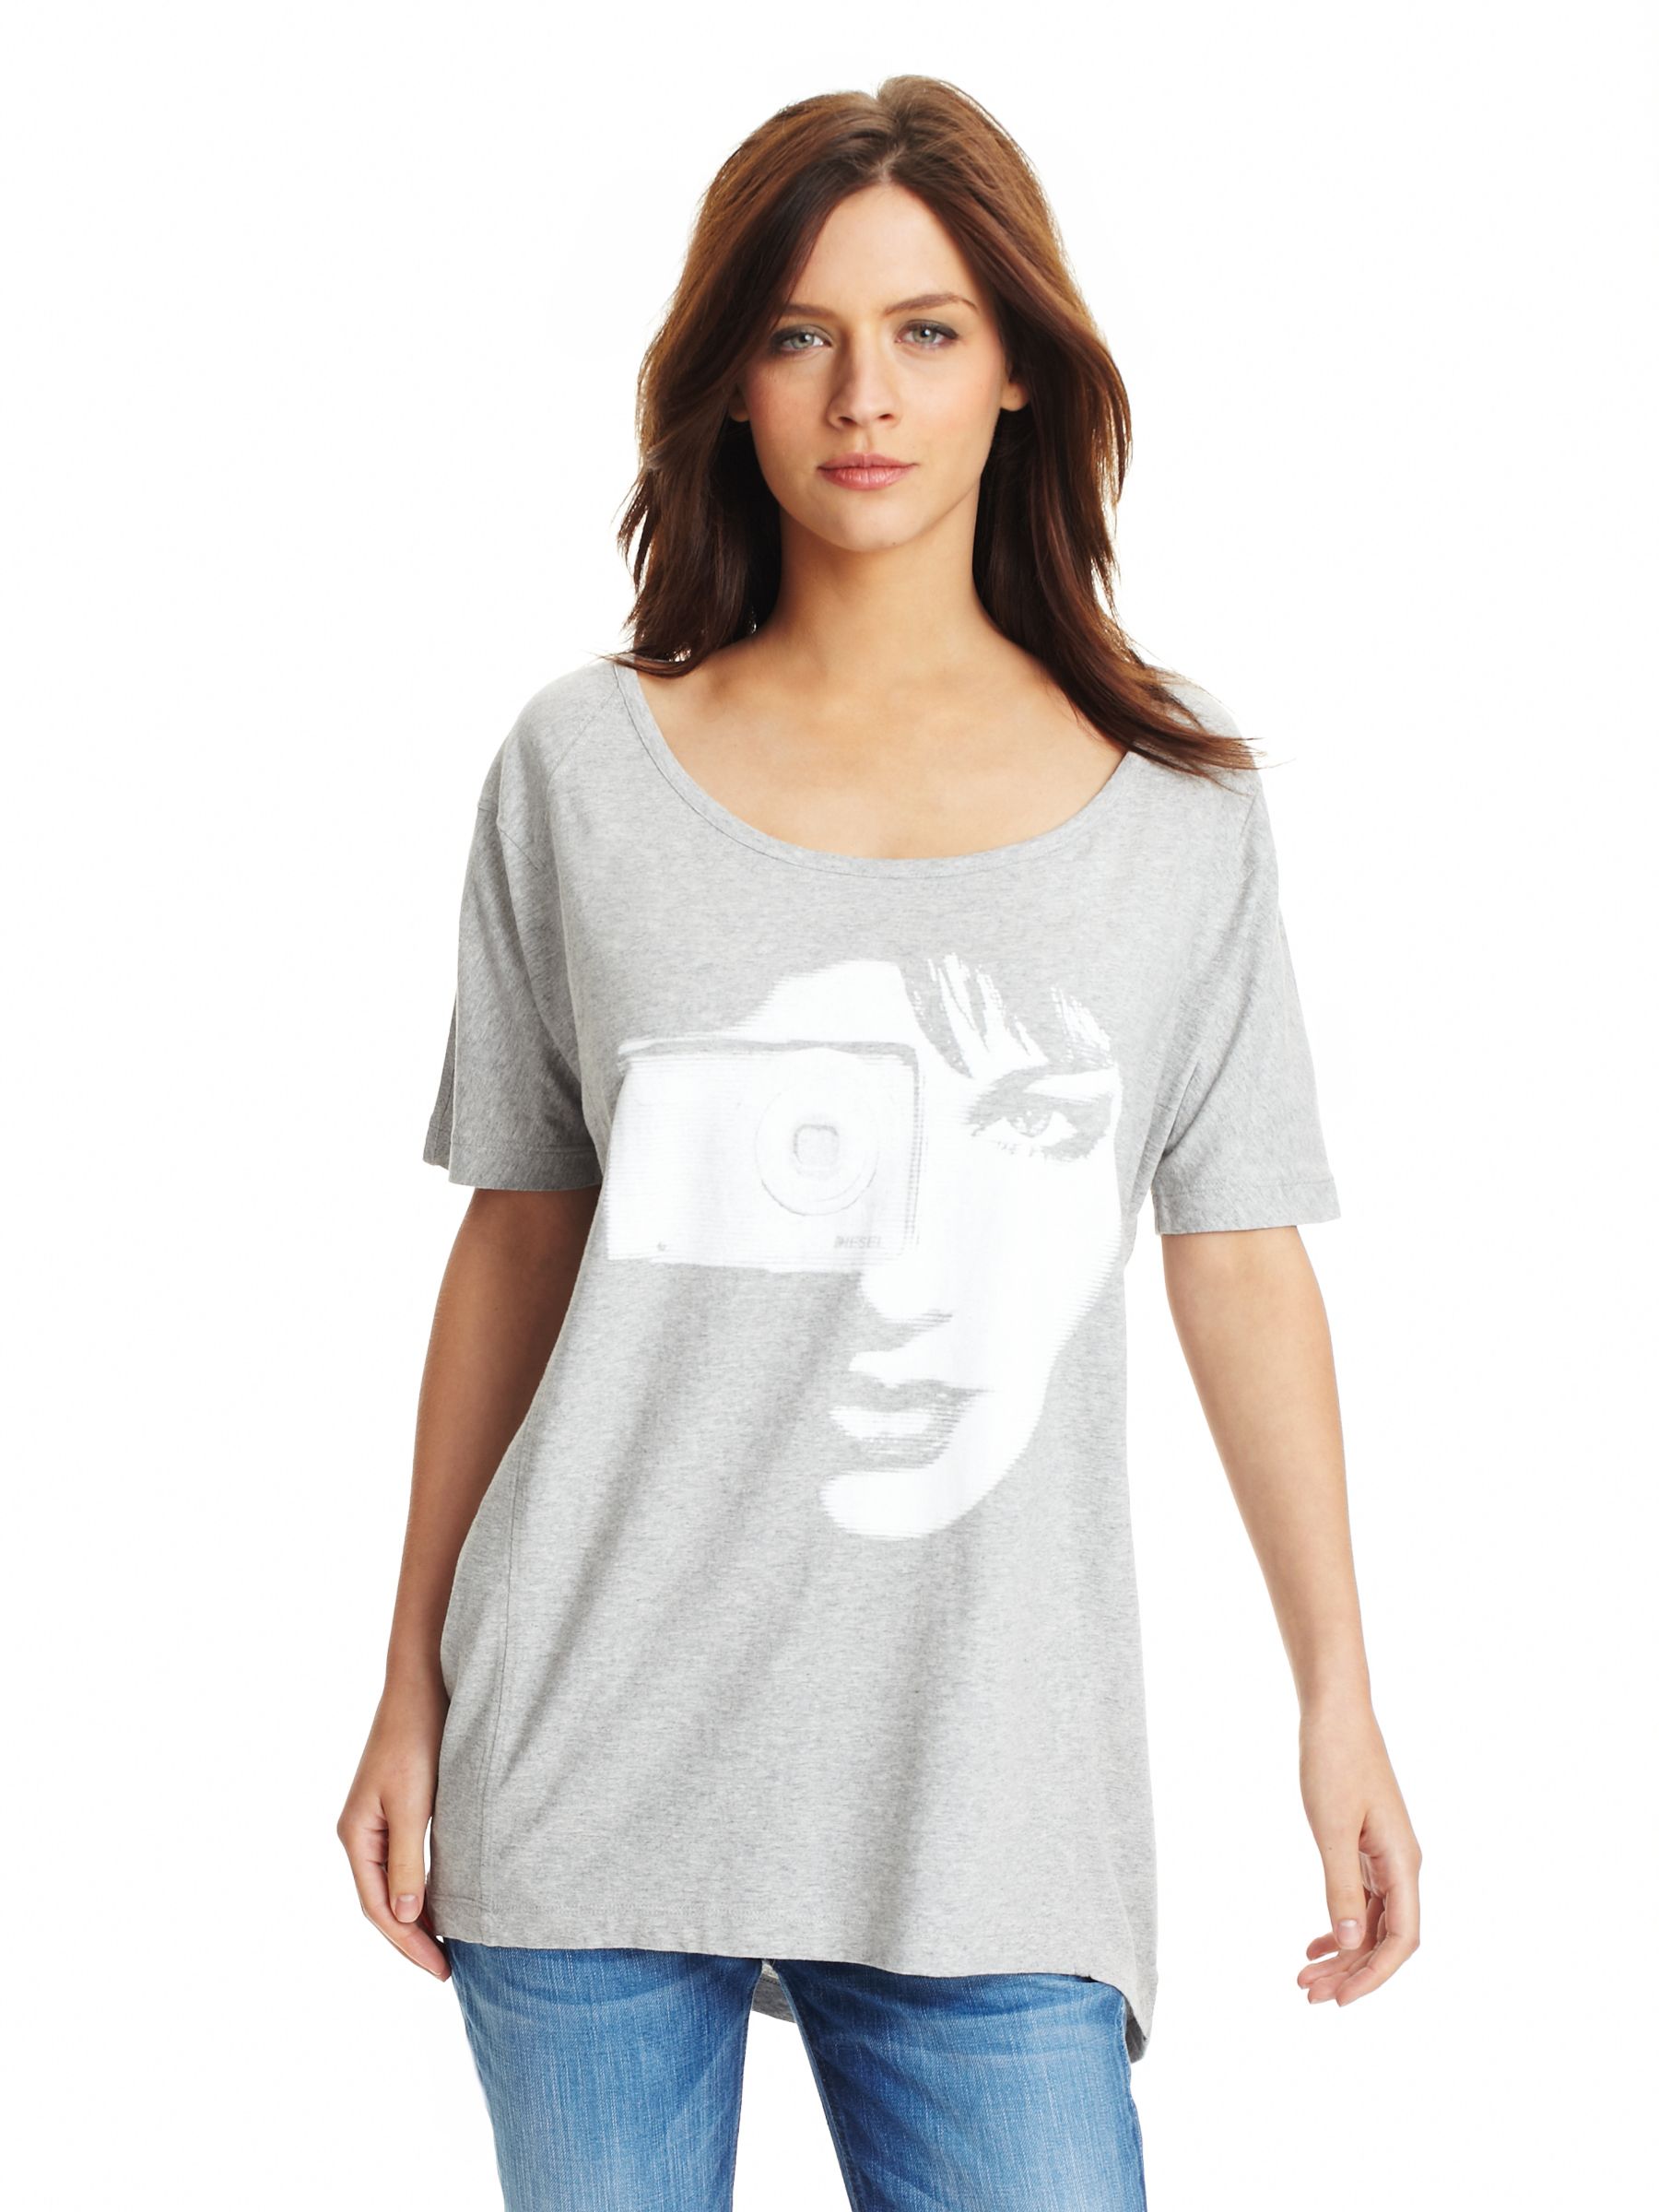 Diesel Camera Print Cotton T-Shirt, Grey